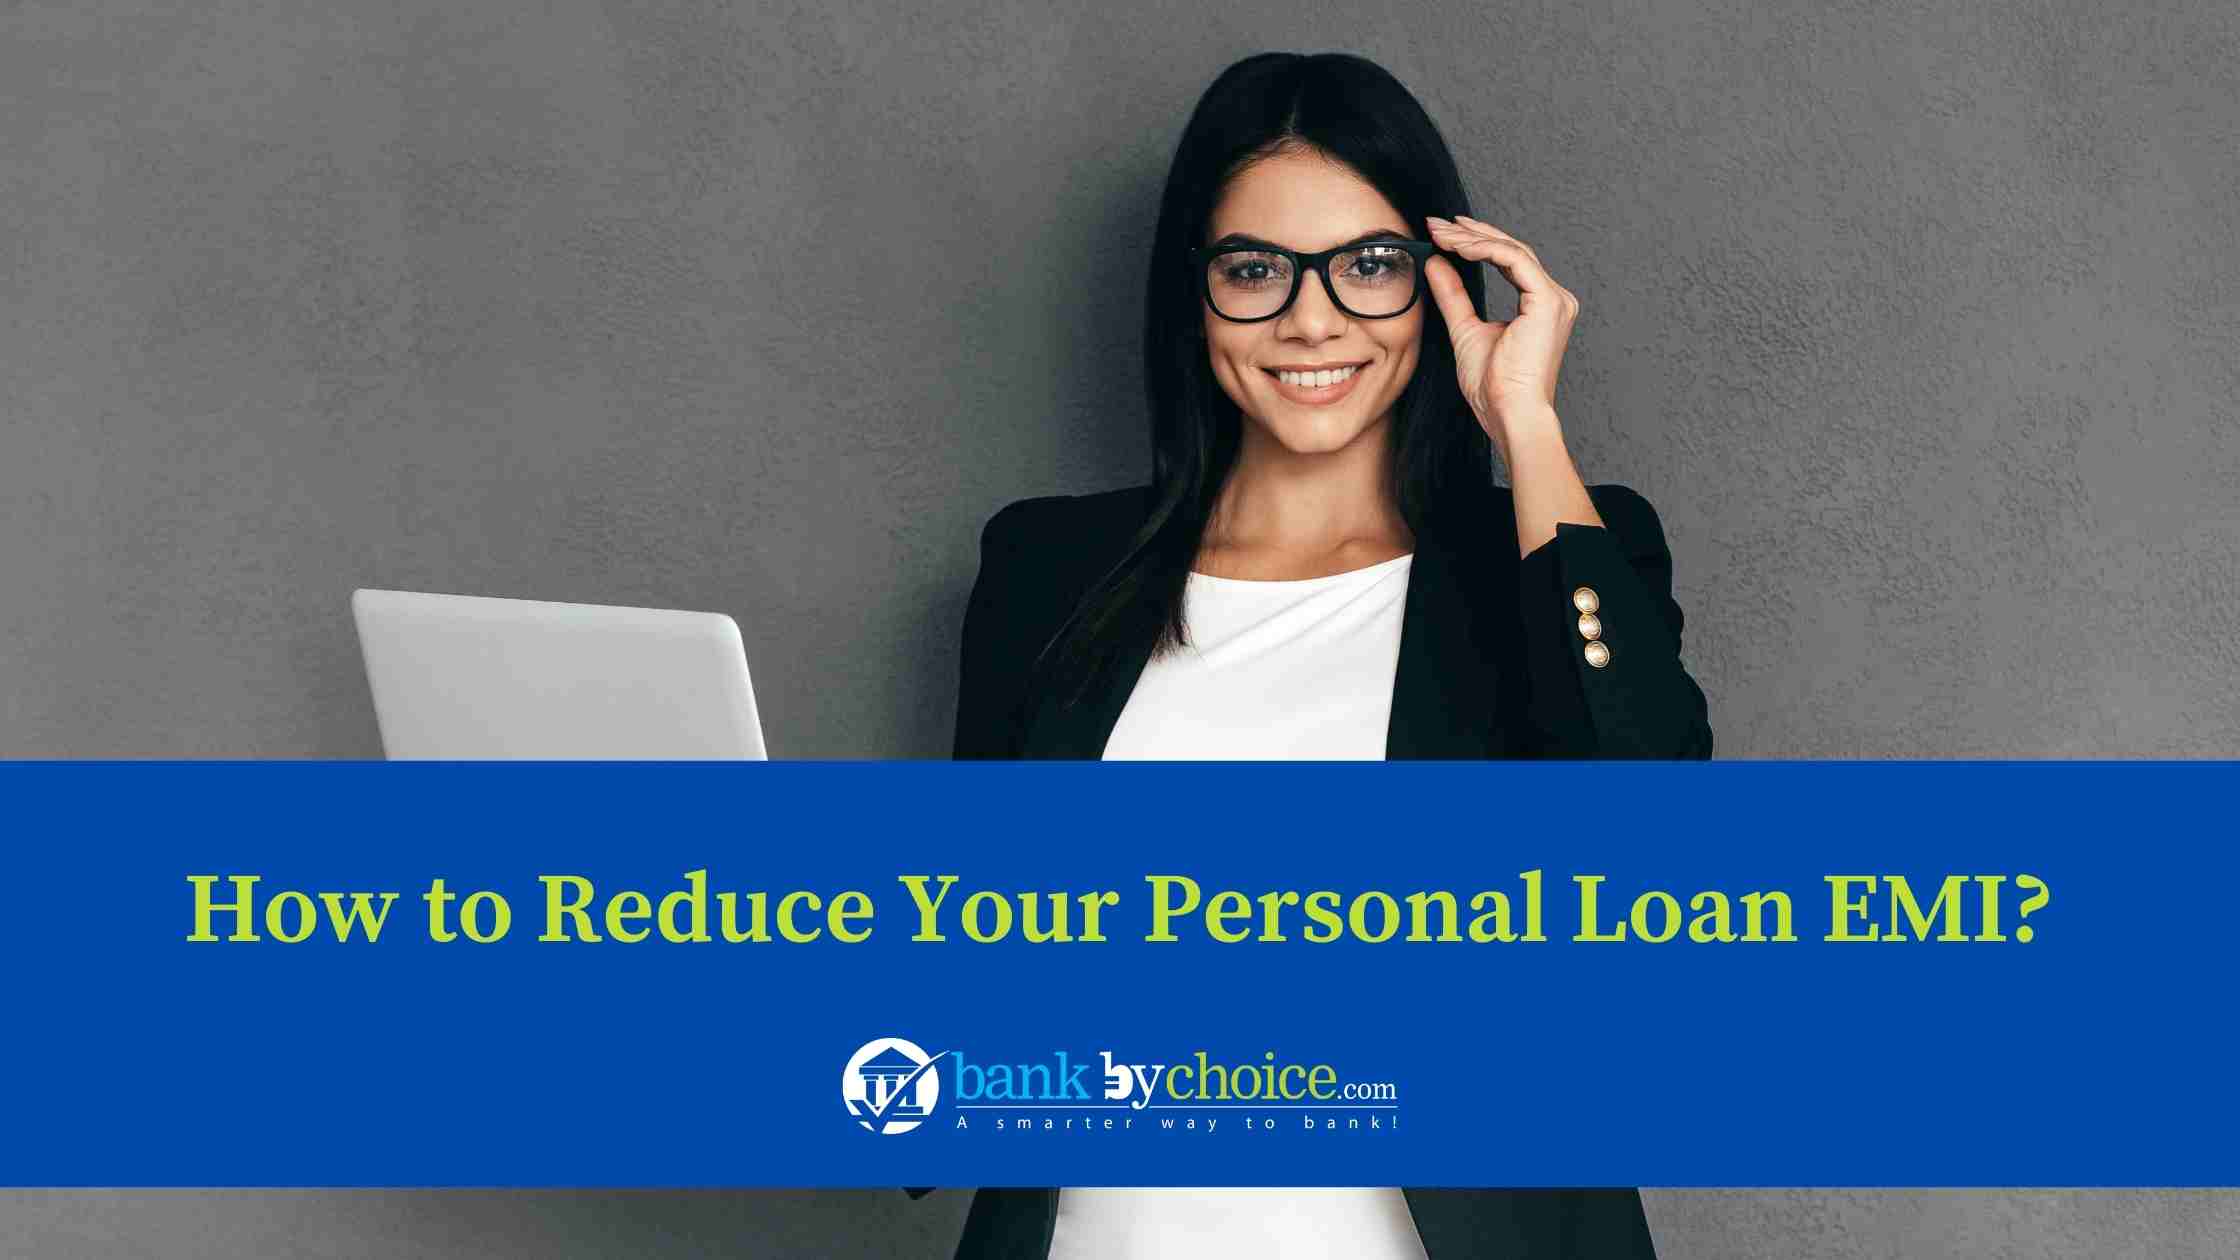 Reduce Personal Loan EMI- Bankbychoice